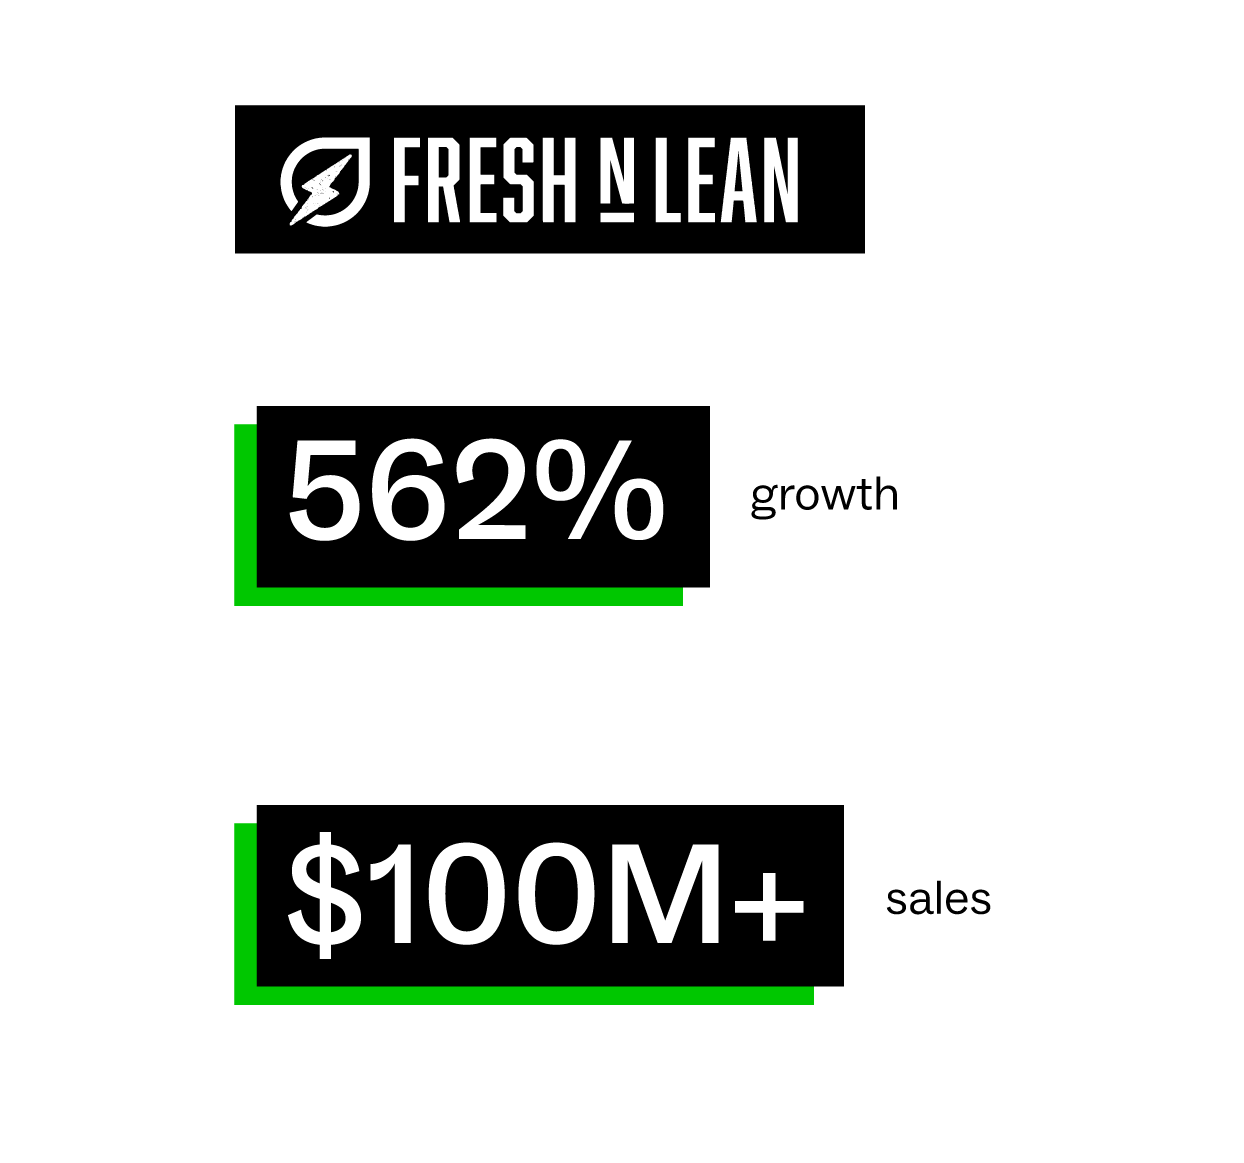 Fresh N' Lean 562% growth and $100M+ sales